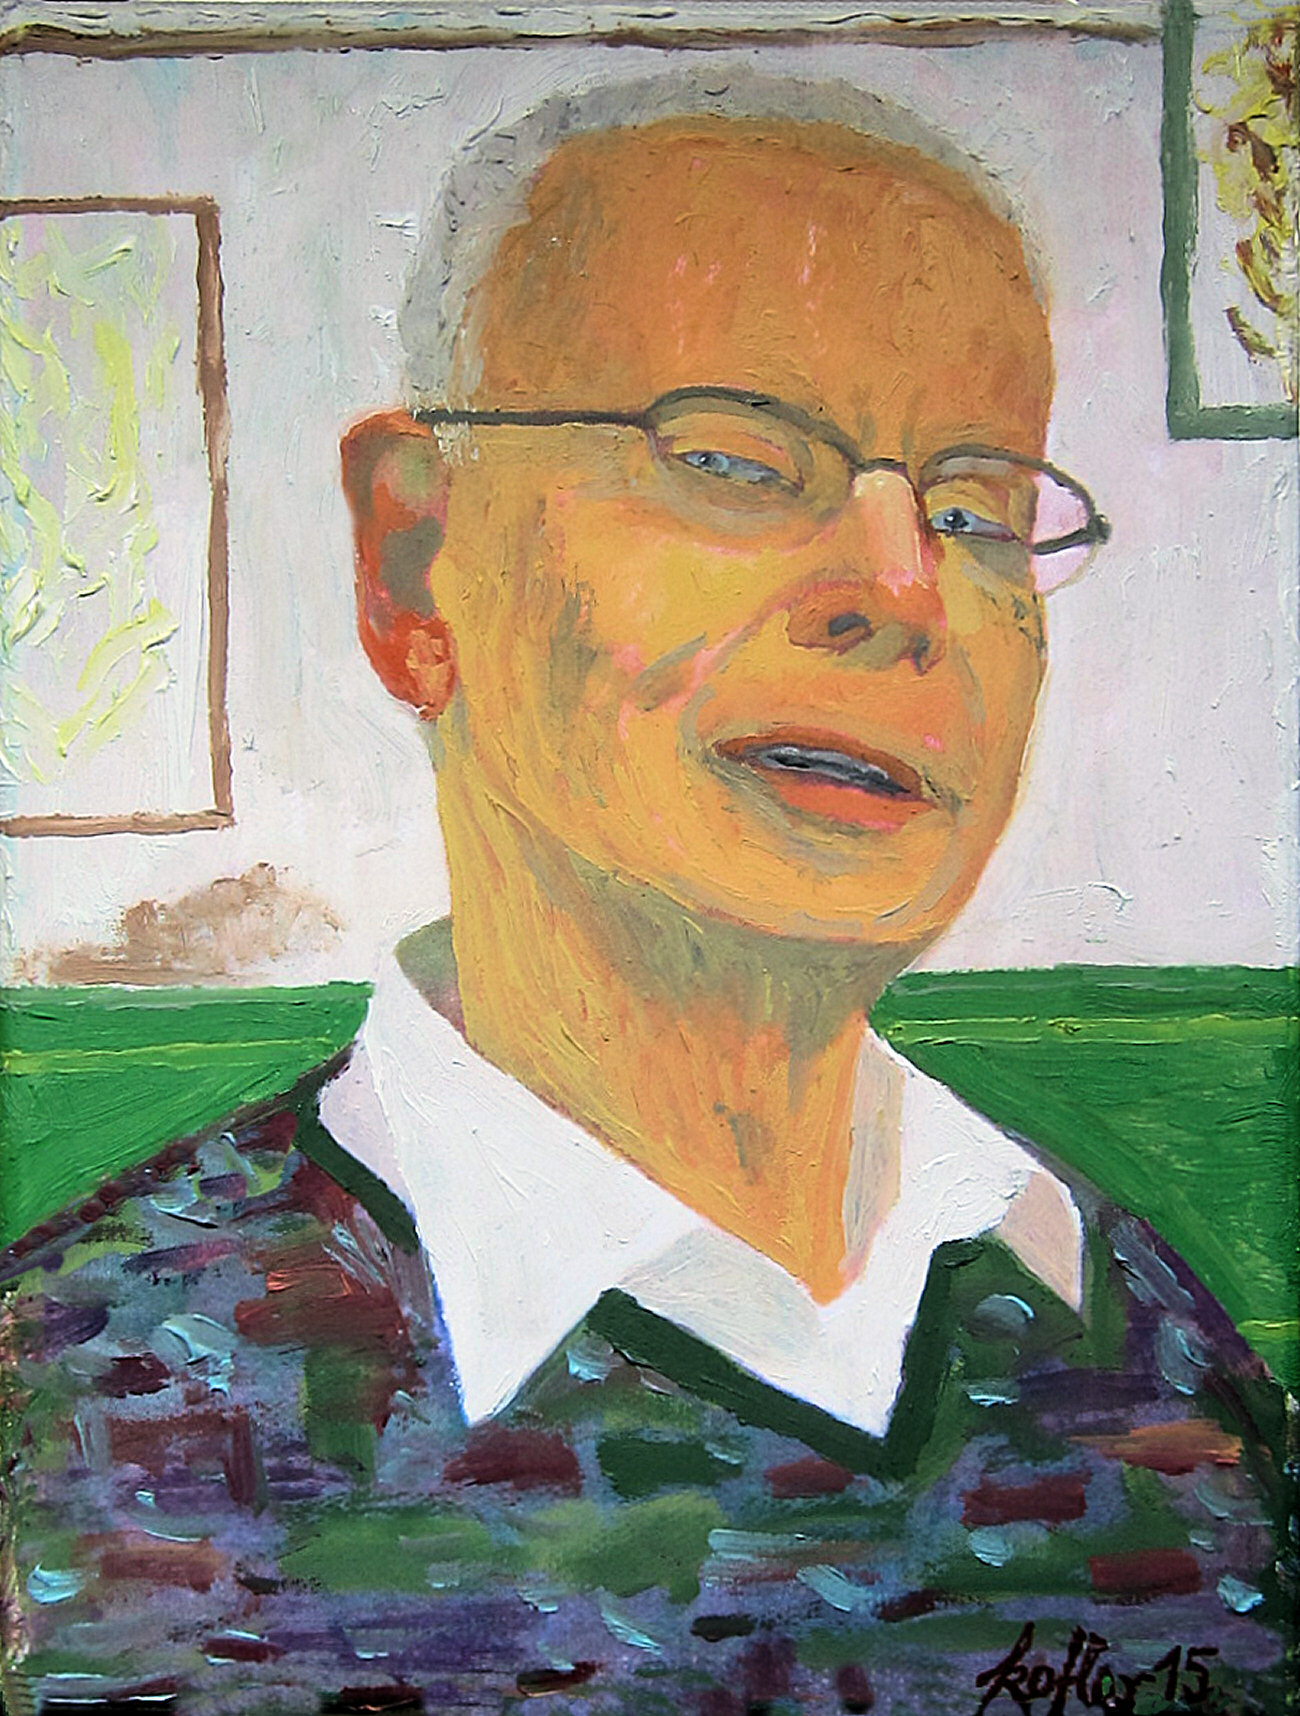 Painting: Joergen portrait